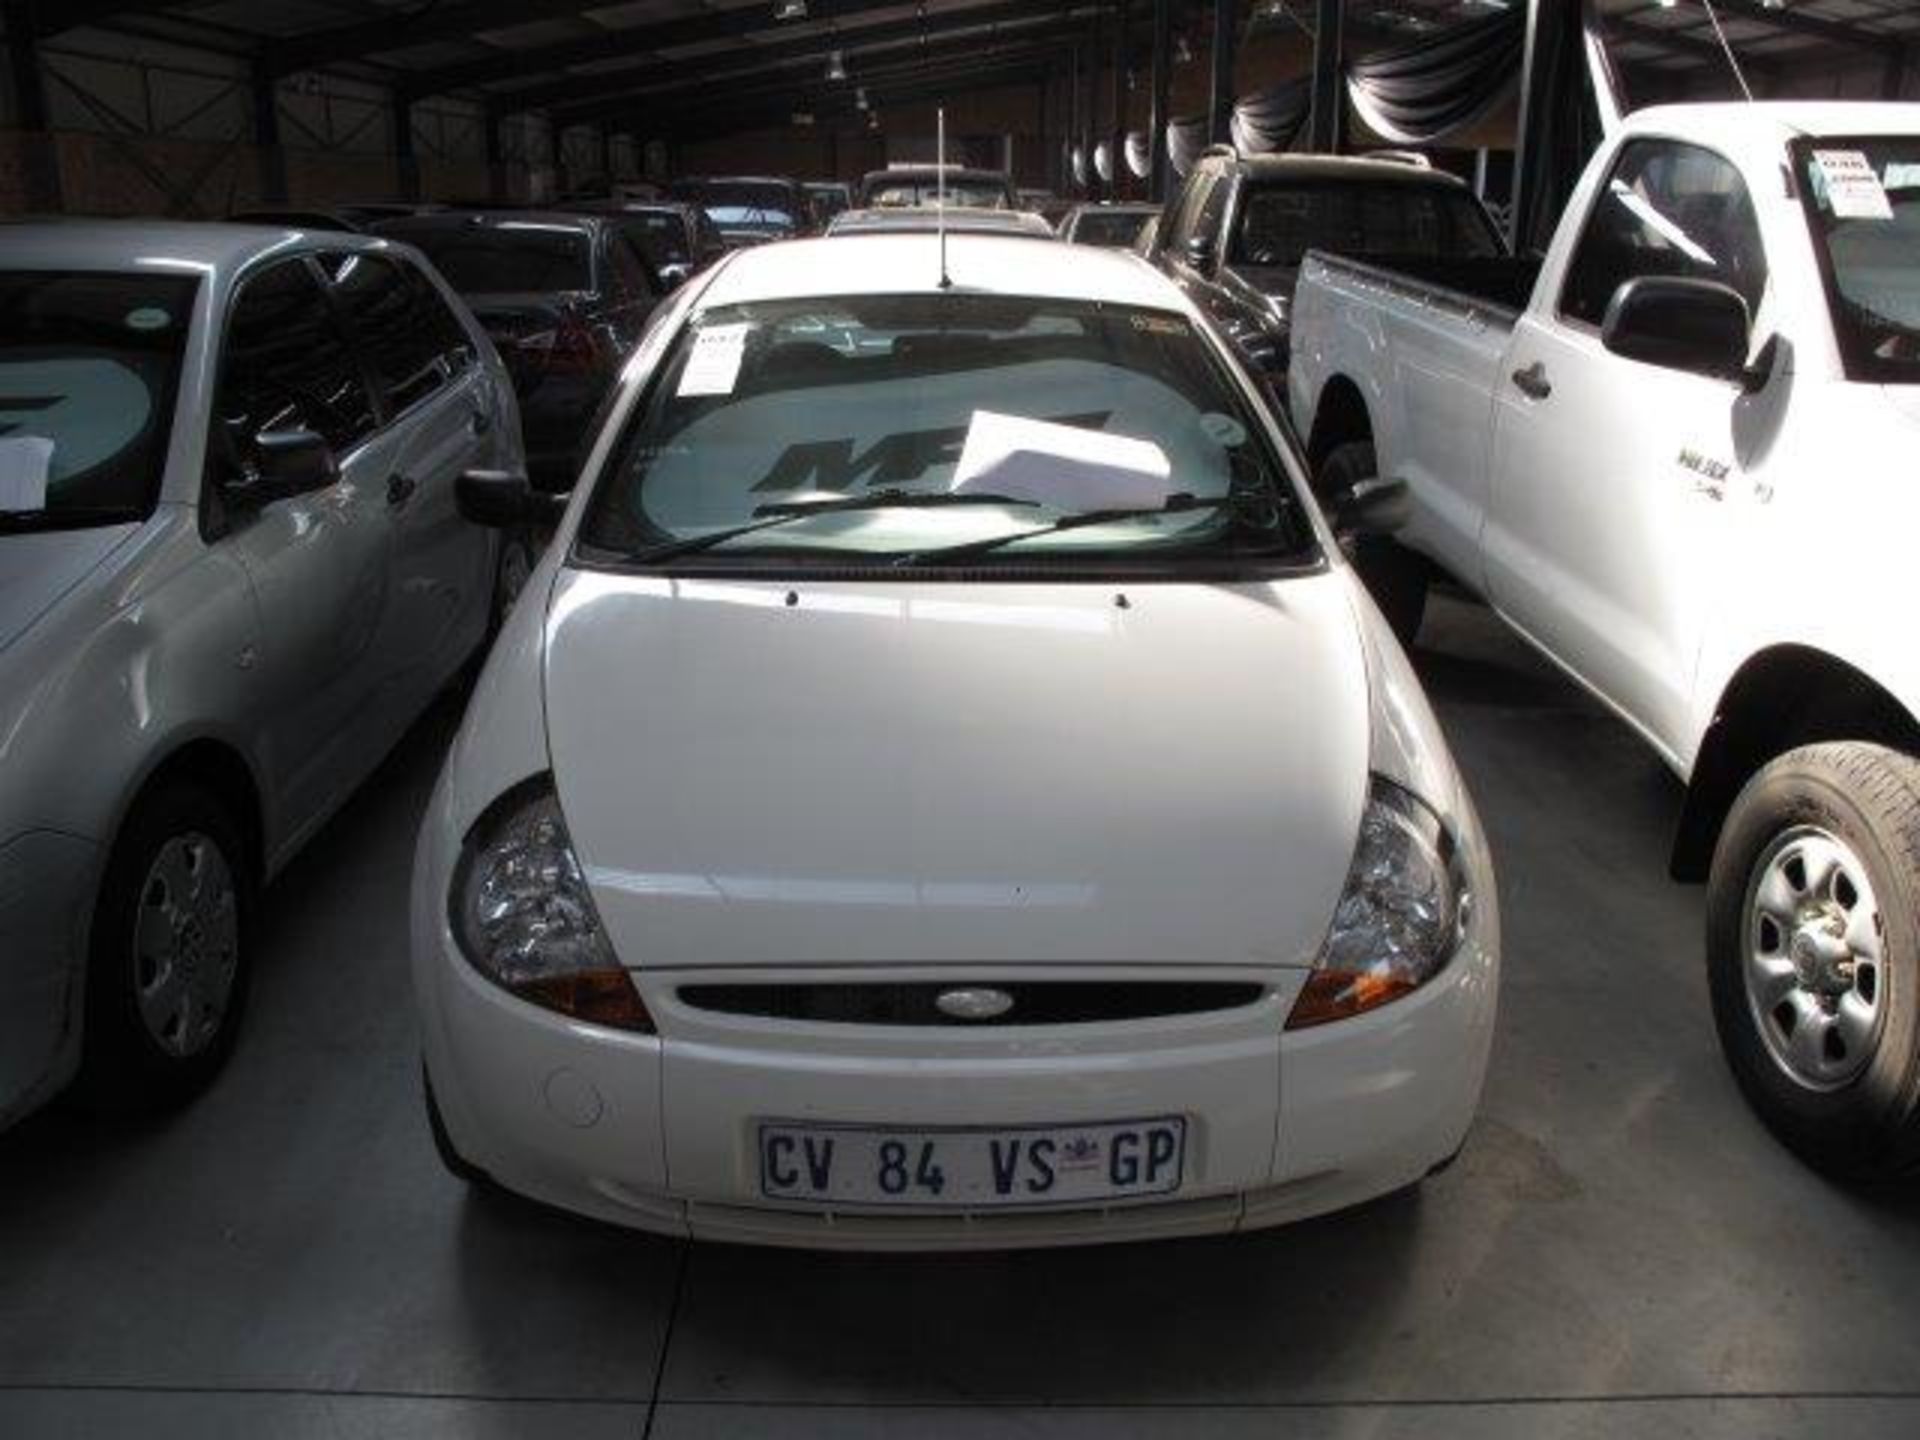 2007 CV84VSGP Ford KA Trend (Vin No: WF0BXXWPRB5K01619 )(73 370 kms) - Image 4 of 4